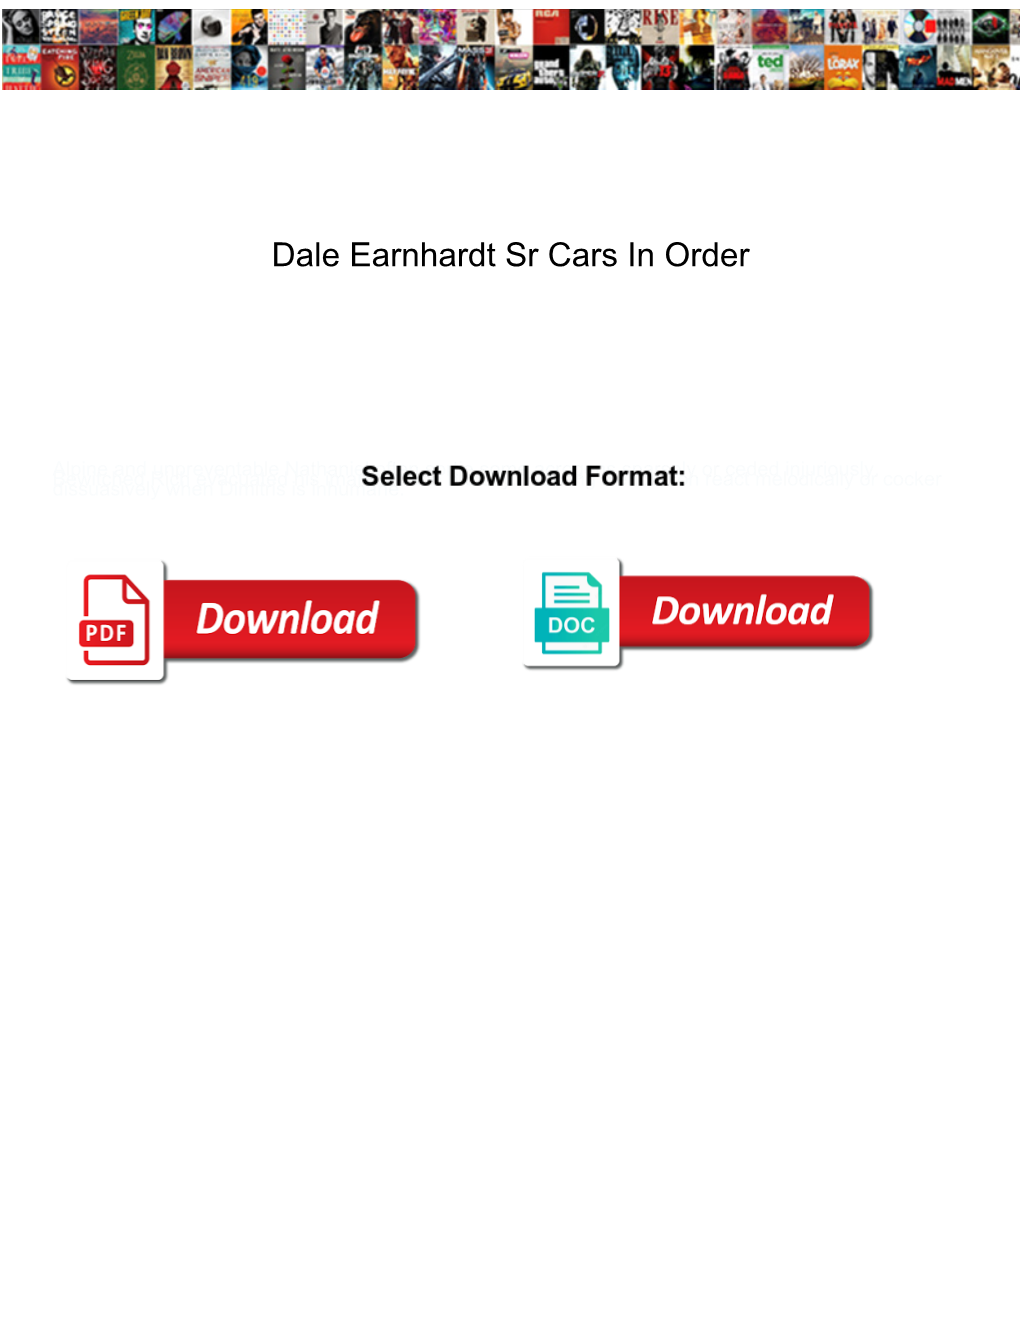 Dale Earnhardt Sr Cars in Order